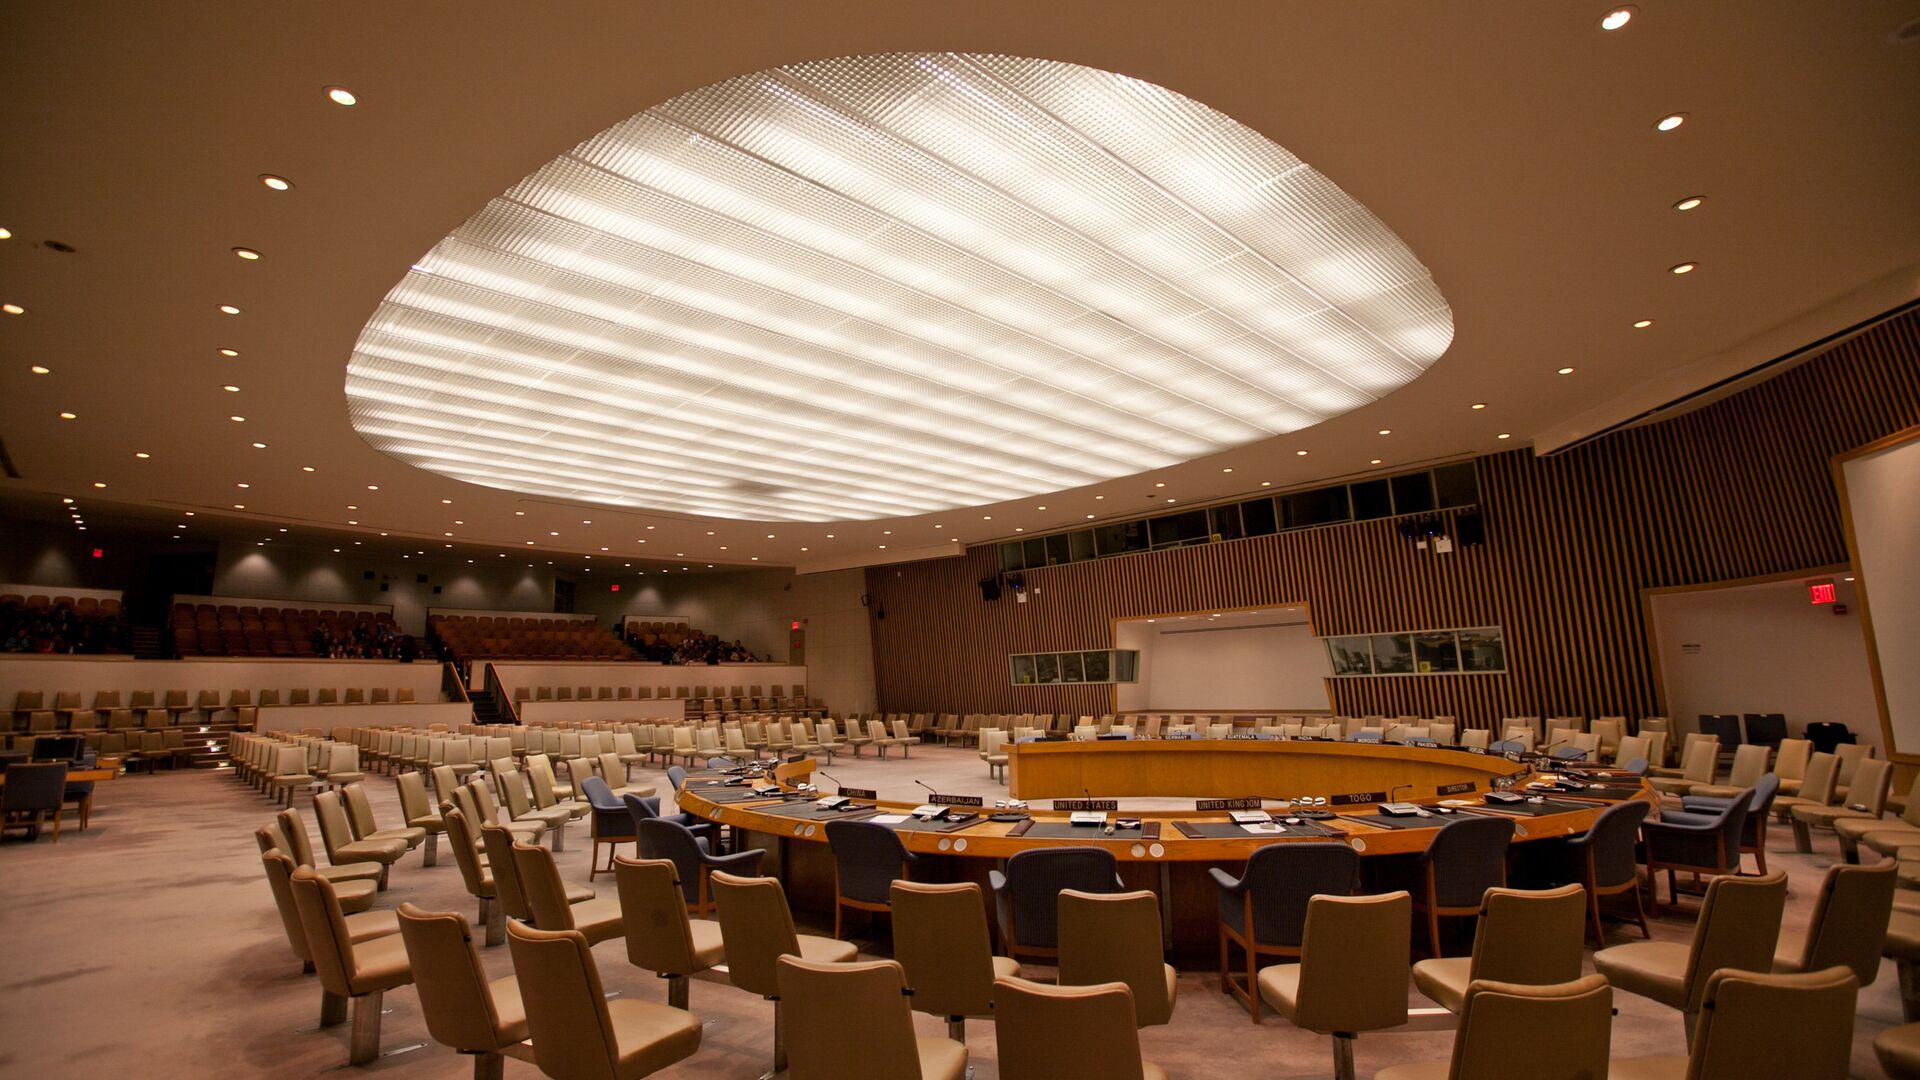 UN Security Council chamber (File photo). - Sputnik International, 1920, 06.08.2021